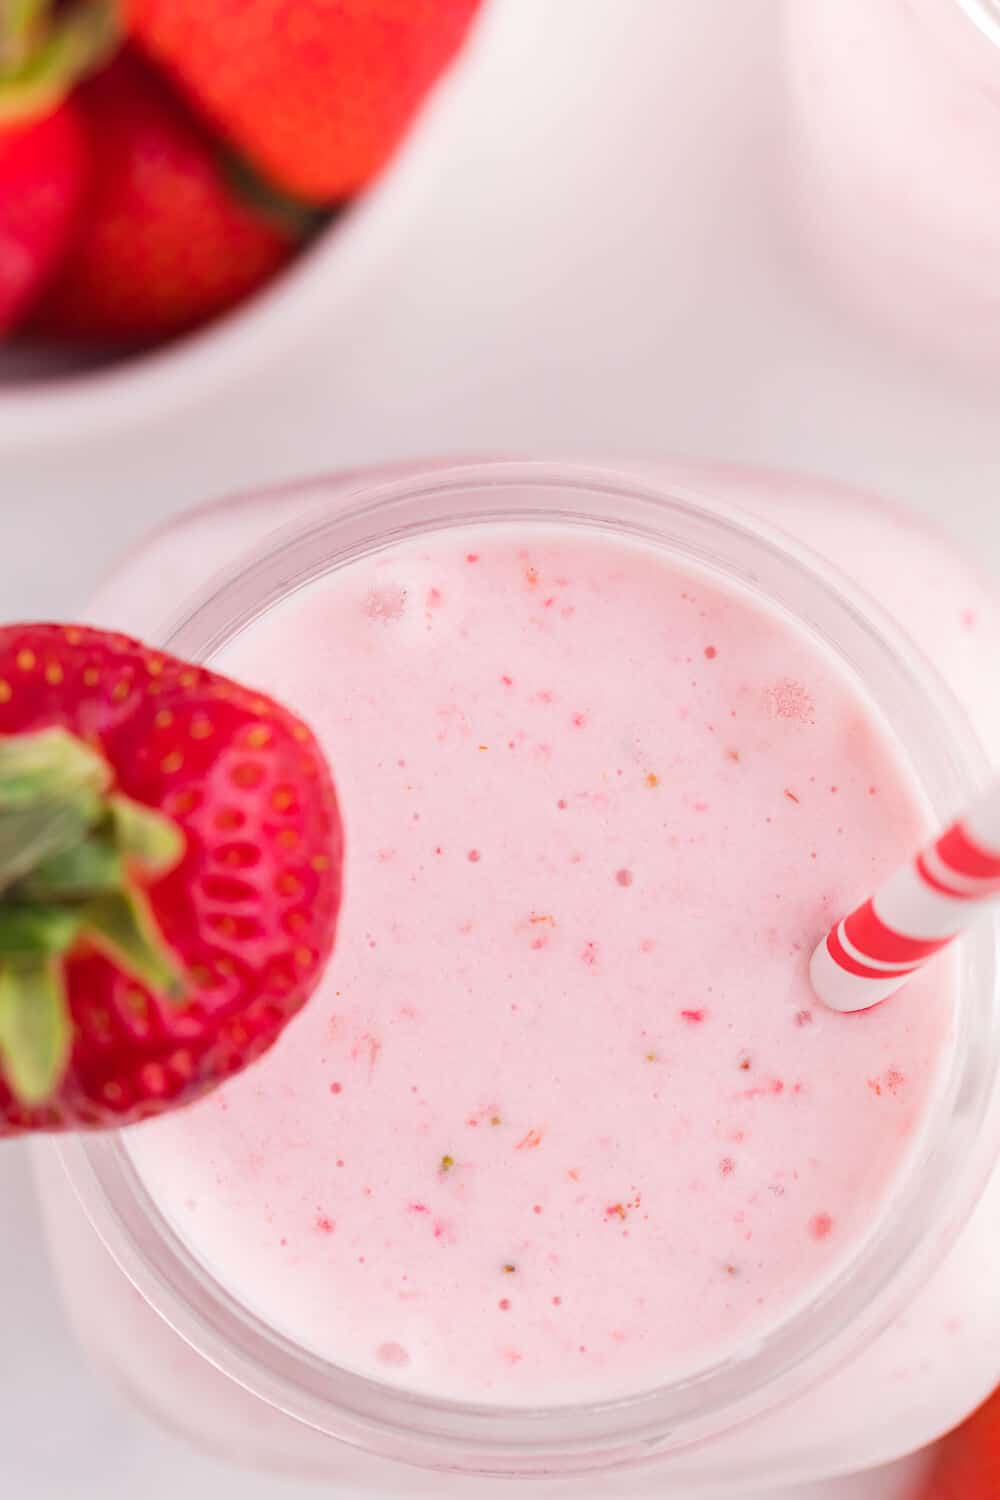 Strawberry vanilla smoothie in a glass mug with a straw and strawberry garnish.